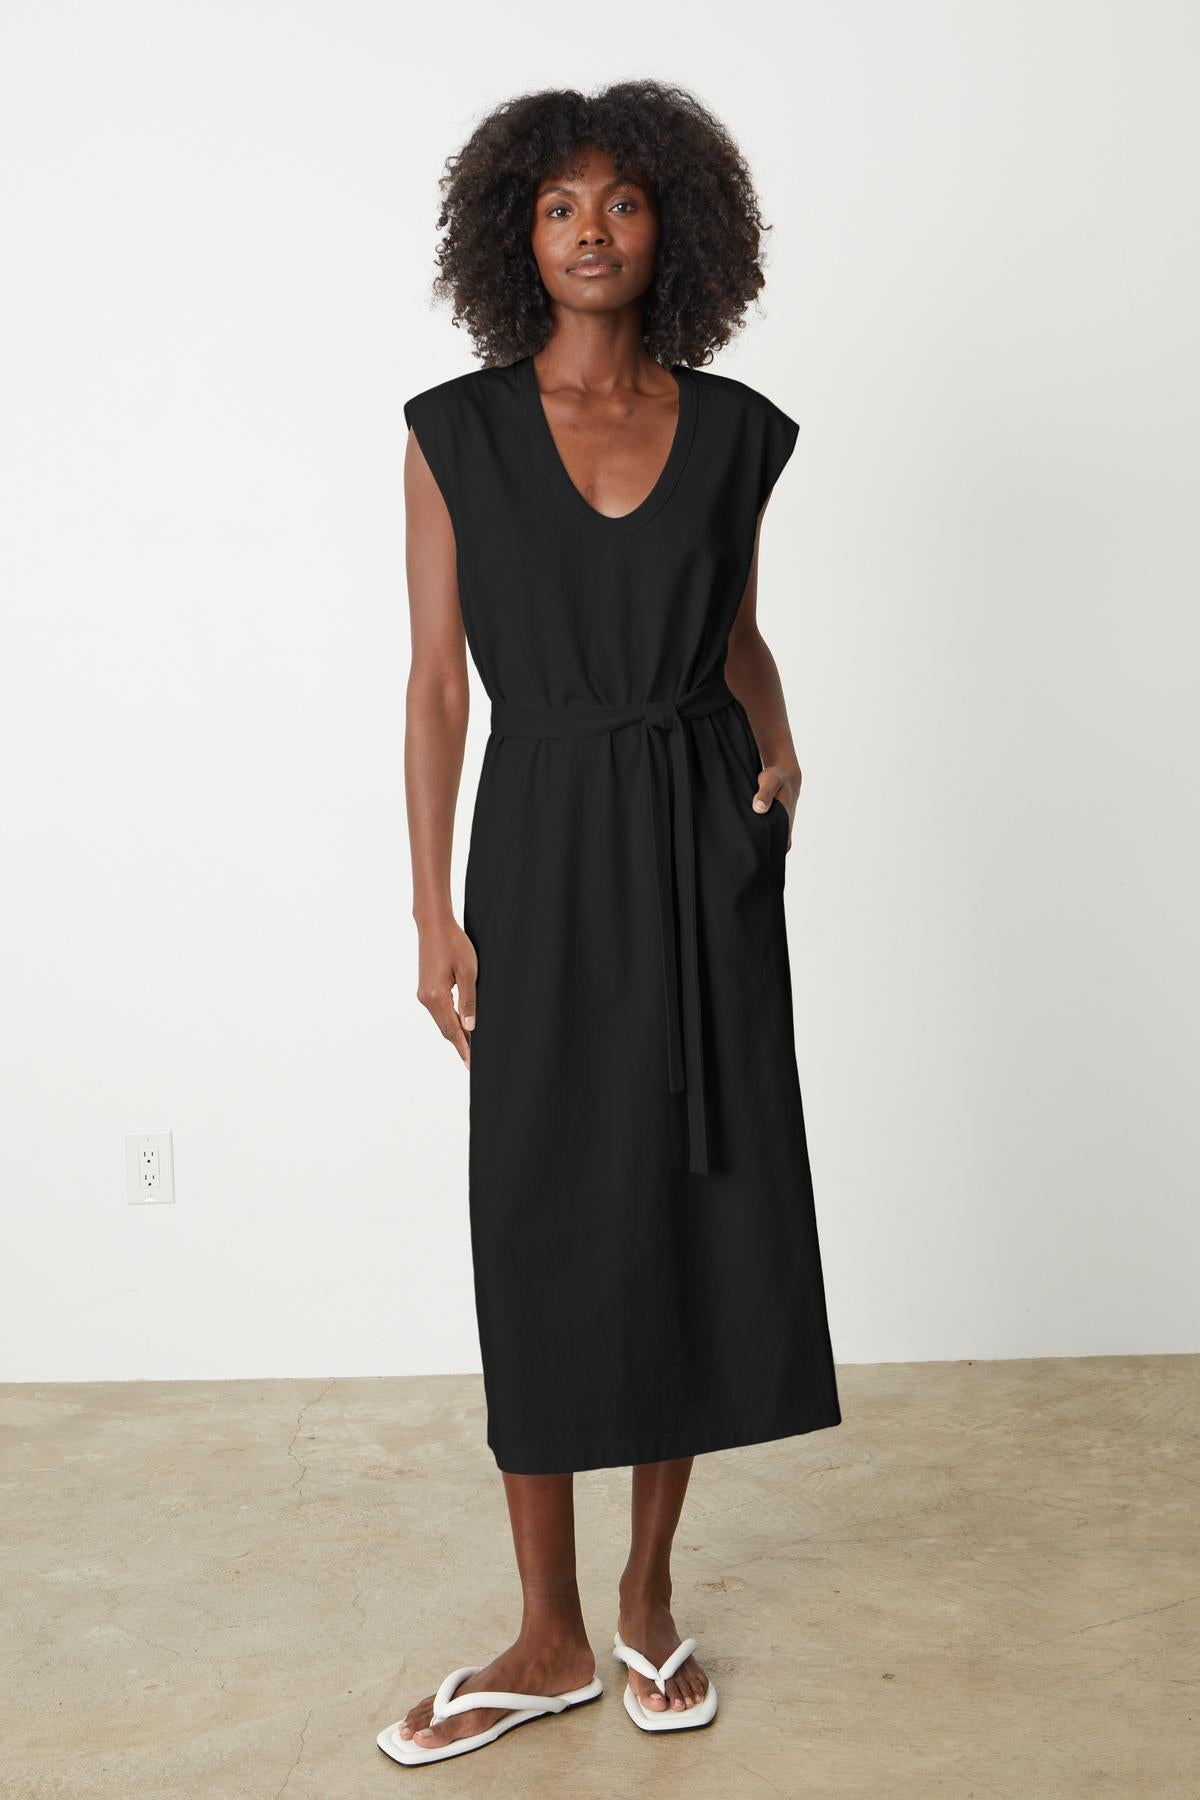 A versatile woman wearing a Velvet by Graham & Spencer MACI SCOOP NECK DRESS.-35201180336321